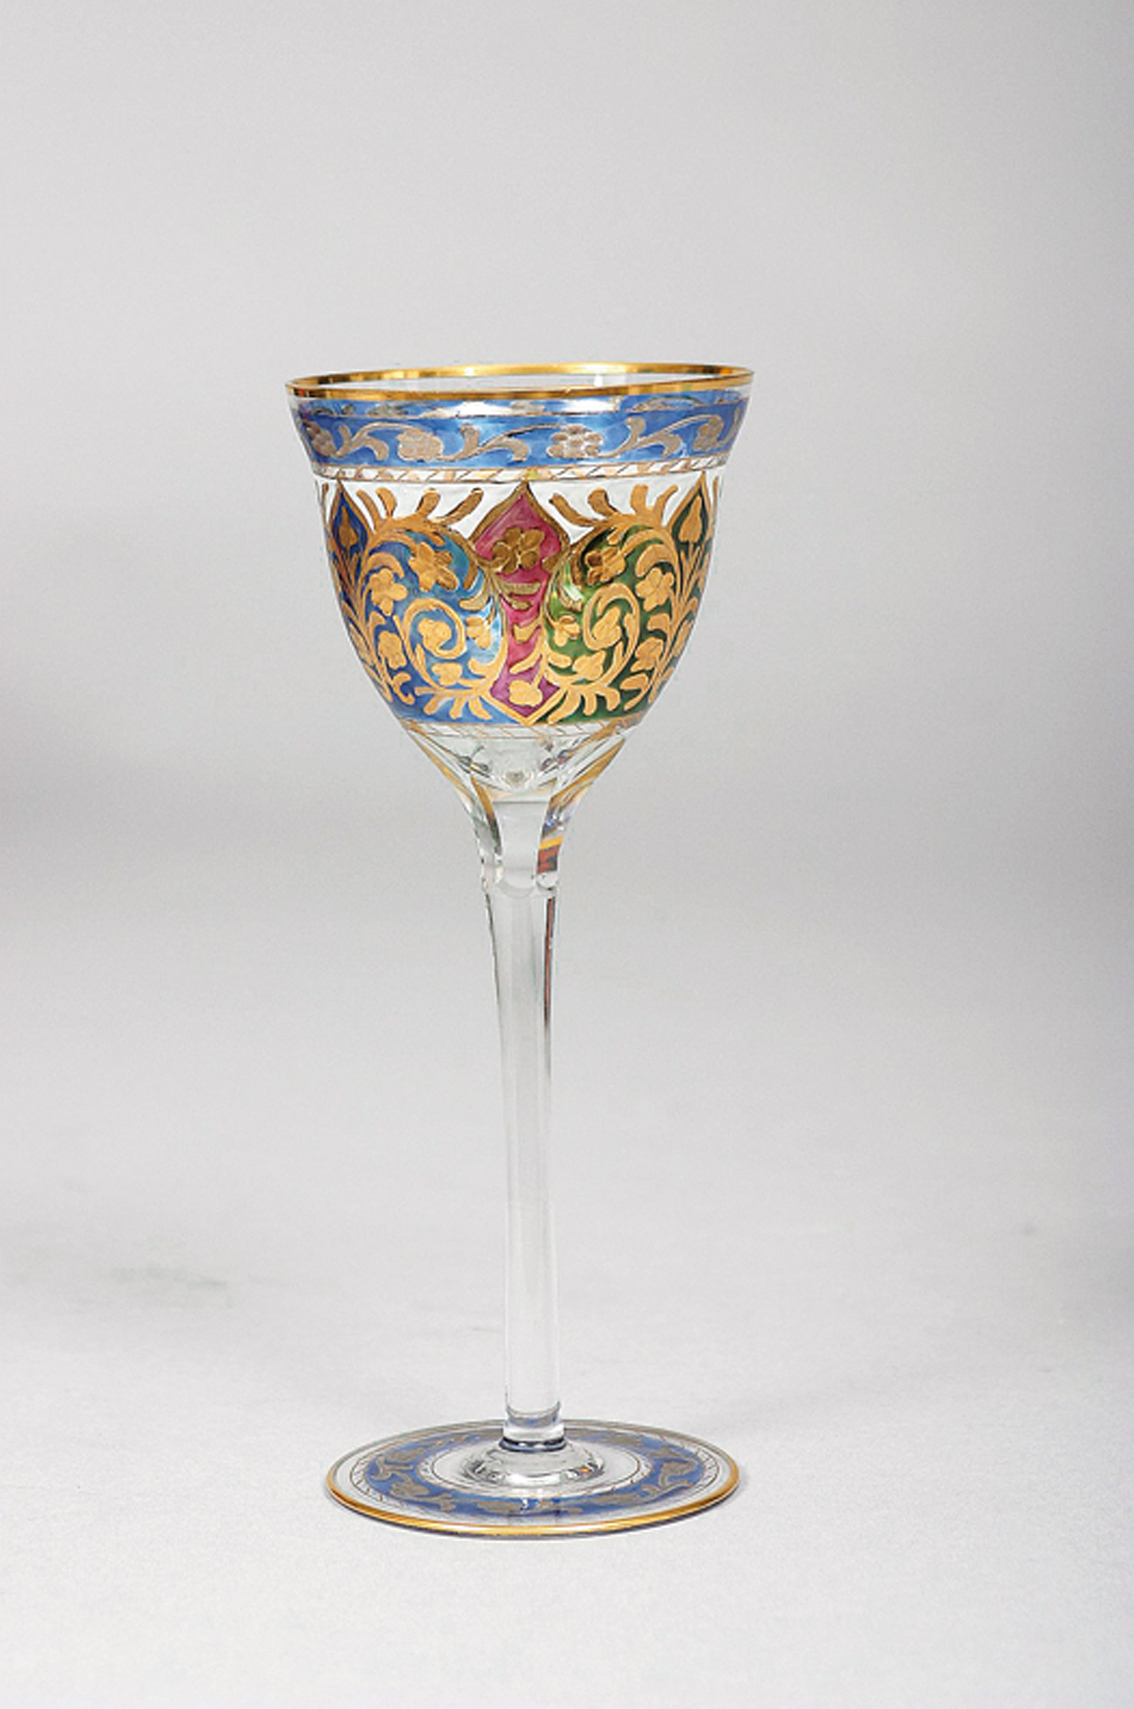 An Art-Nouveau wine glass